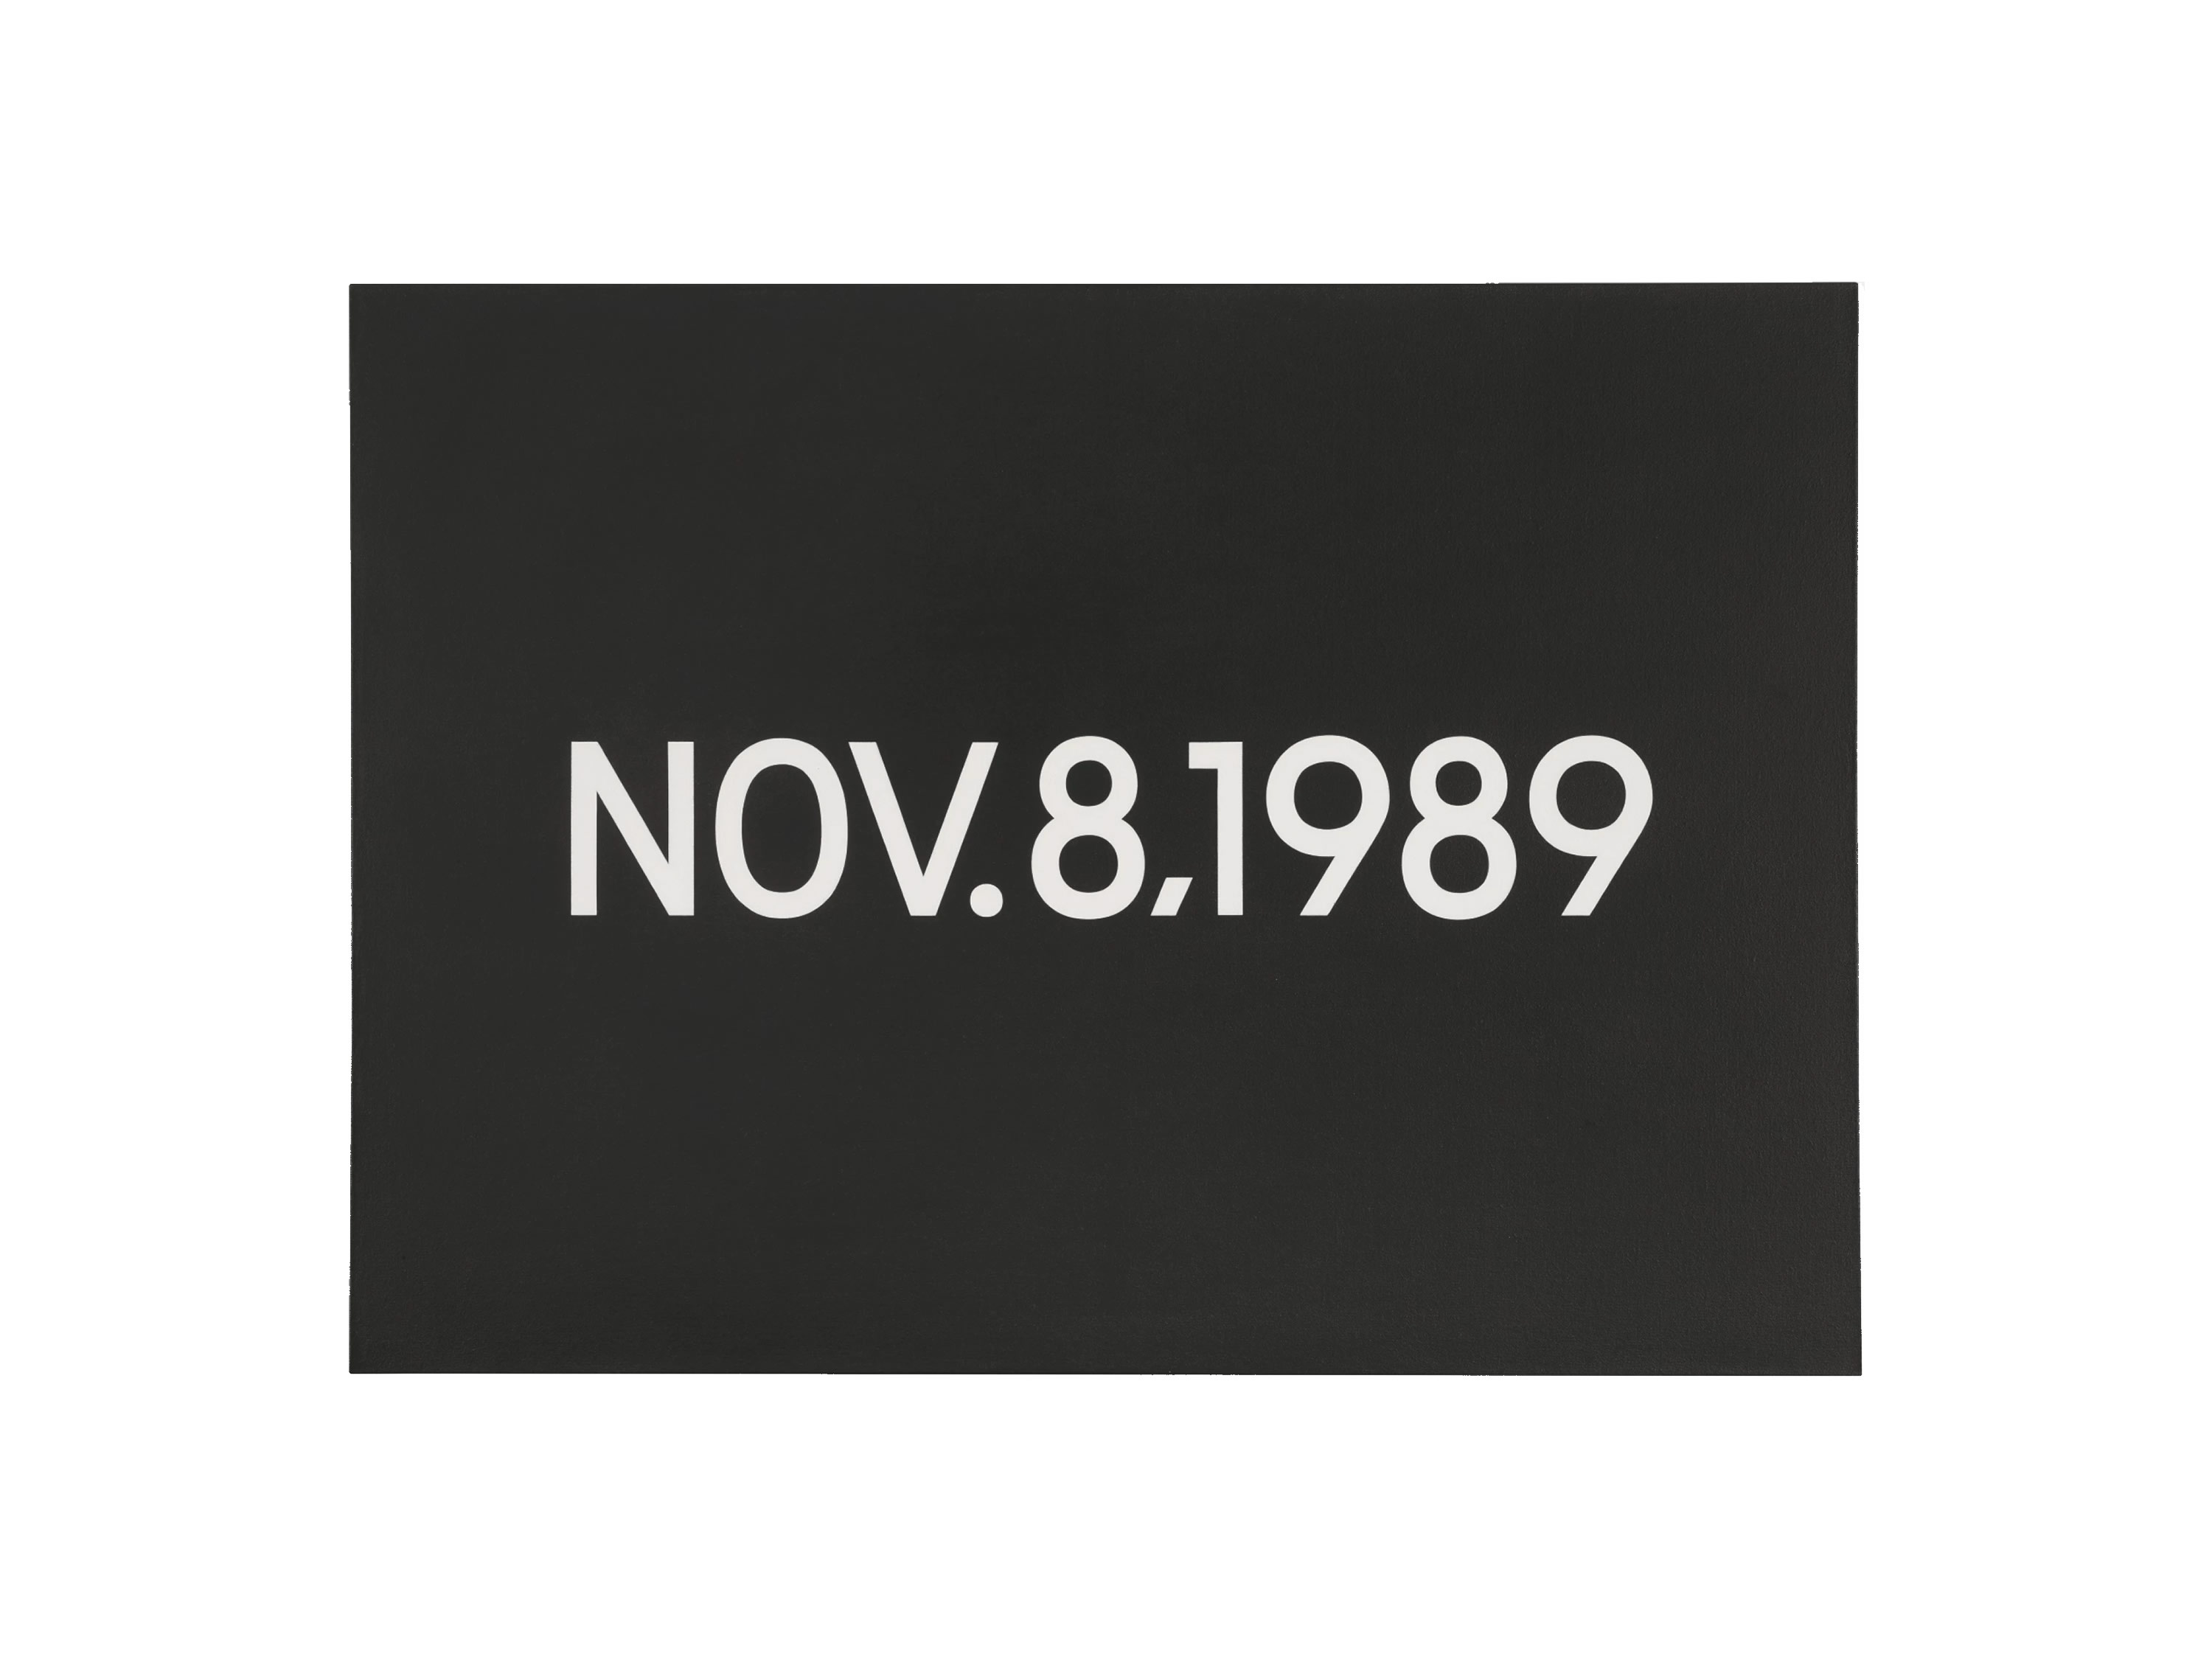 On Kawara: NOV. 8, 1989, Liquitex on canvas, 66.2 x 91.4, 1989.